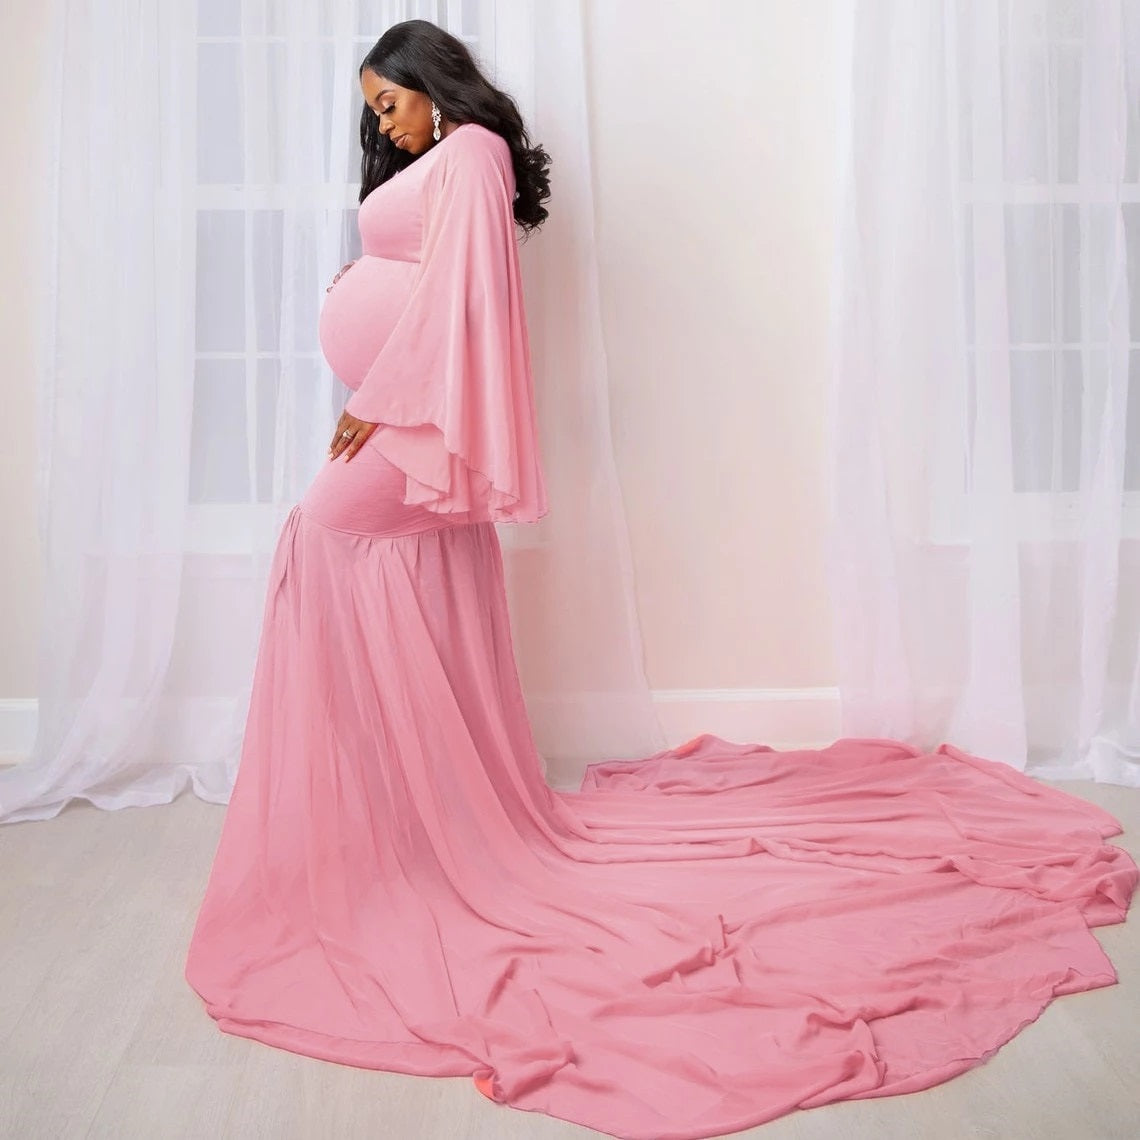 Pink Flamingo Maxi Dress - Moms wardrobe